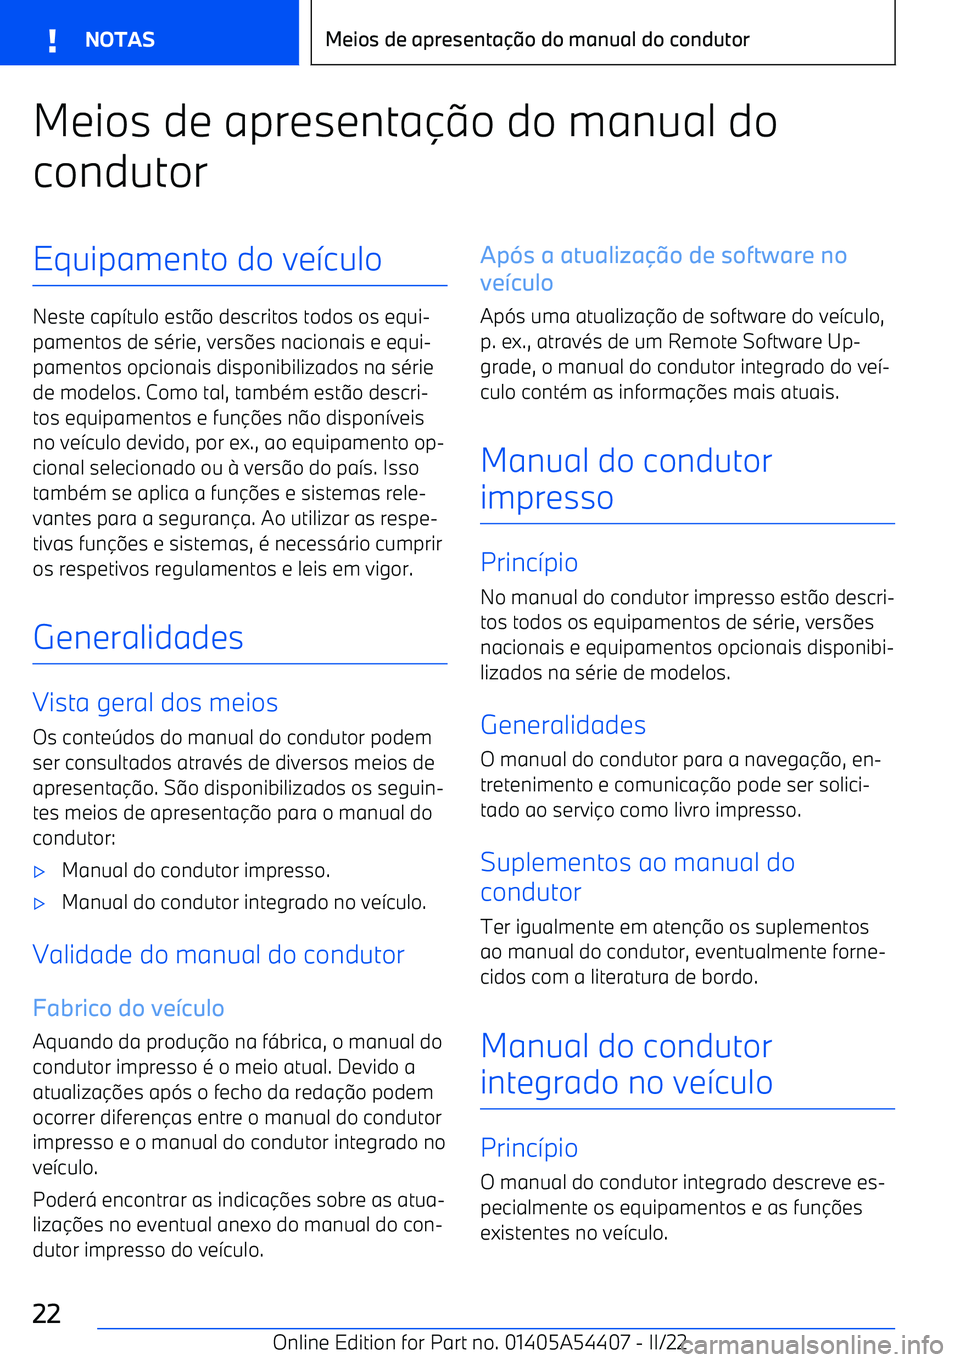 BMW X5 M 2022  Manual do condutor (in Portuguese) Meios de apresentao do manual do
condutorEquipamento do ve